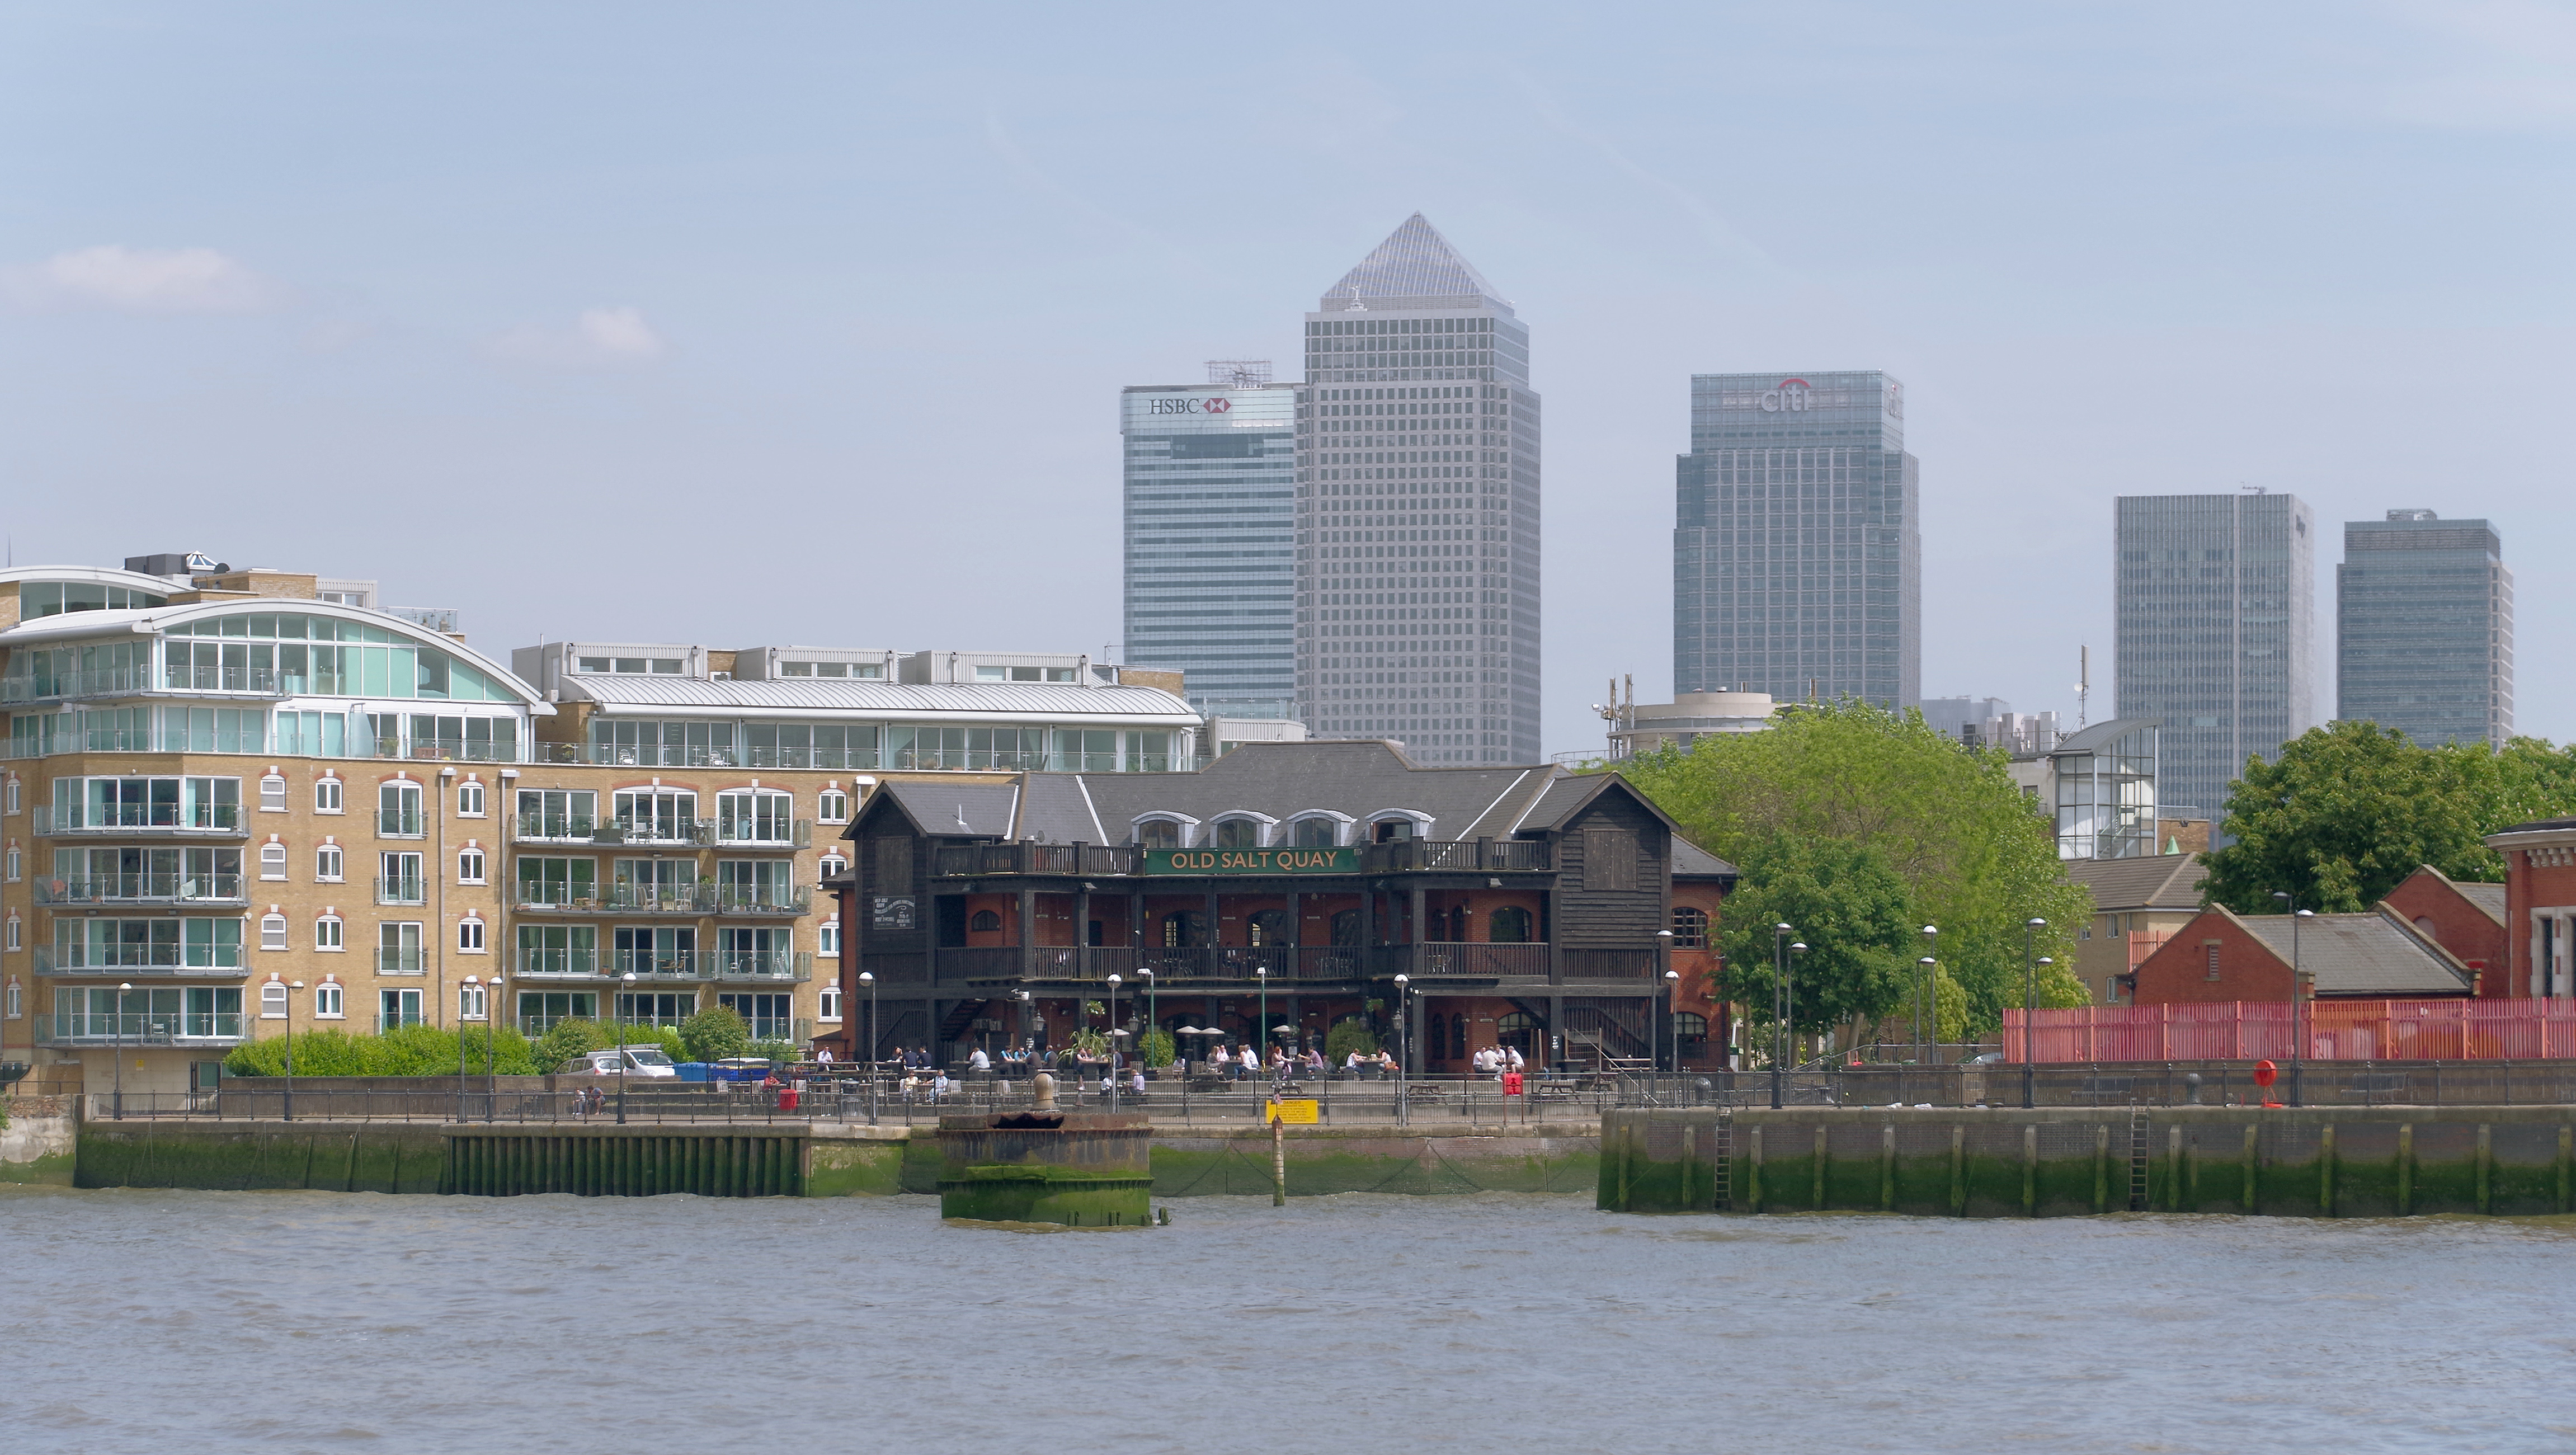 London MMB »0U9 River Thames, Old Salt Quay and Canary Wharf